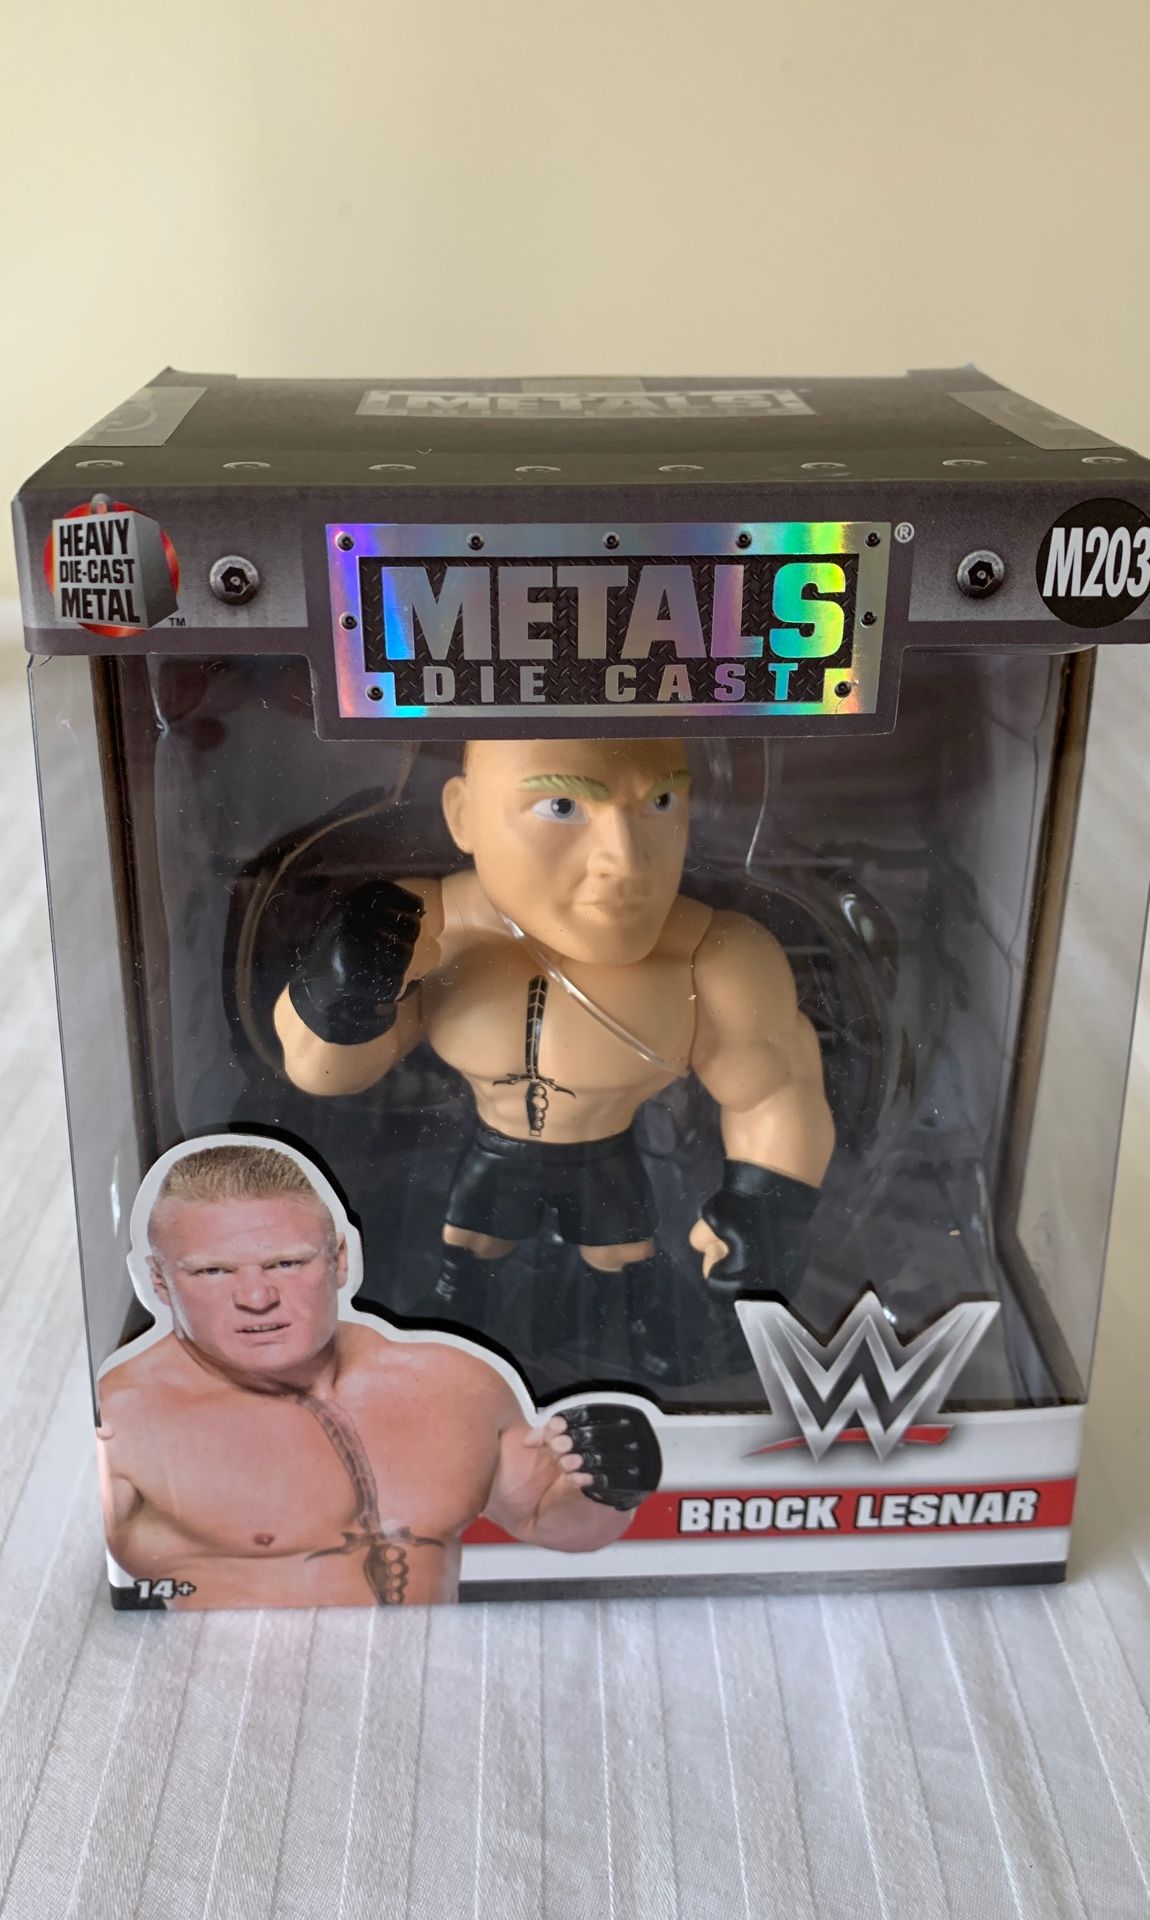 Die Cast Metals Brock Lesnar action figure